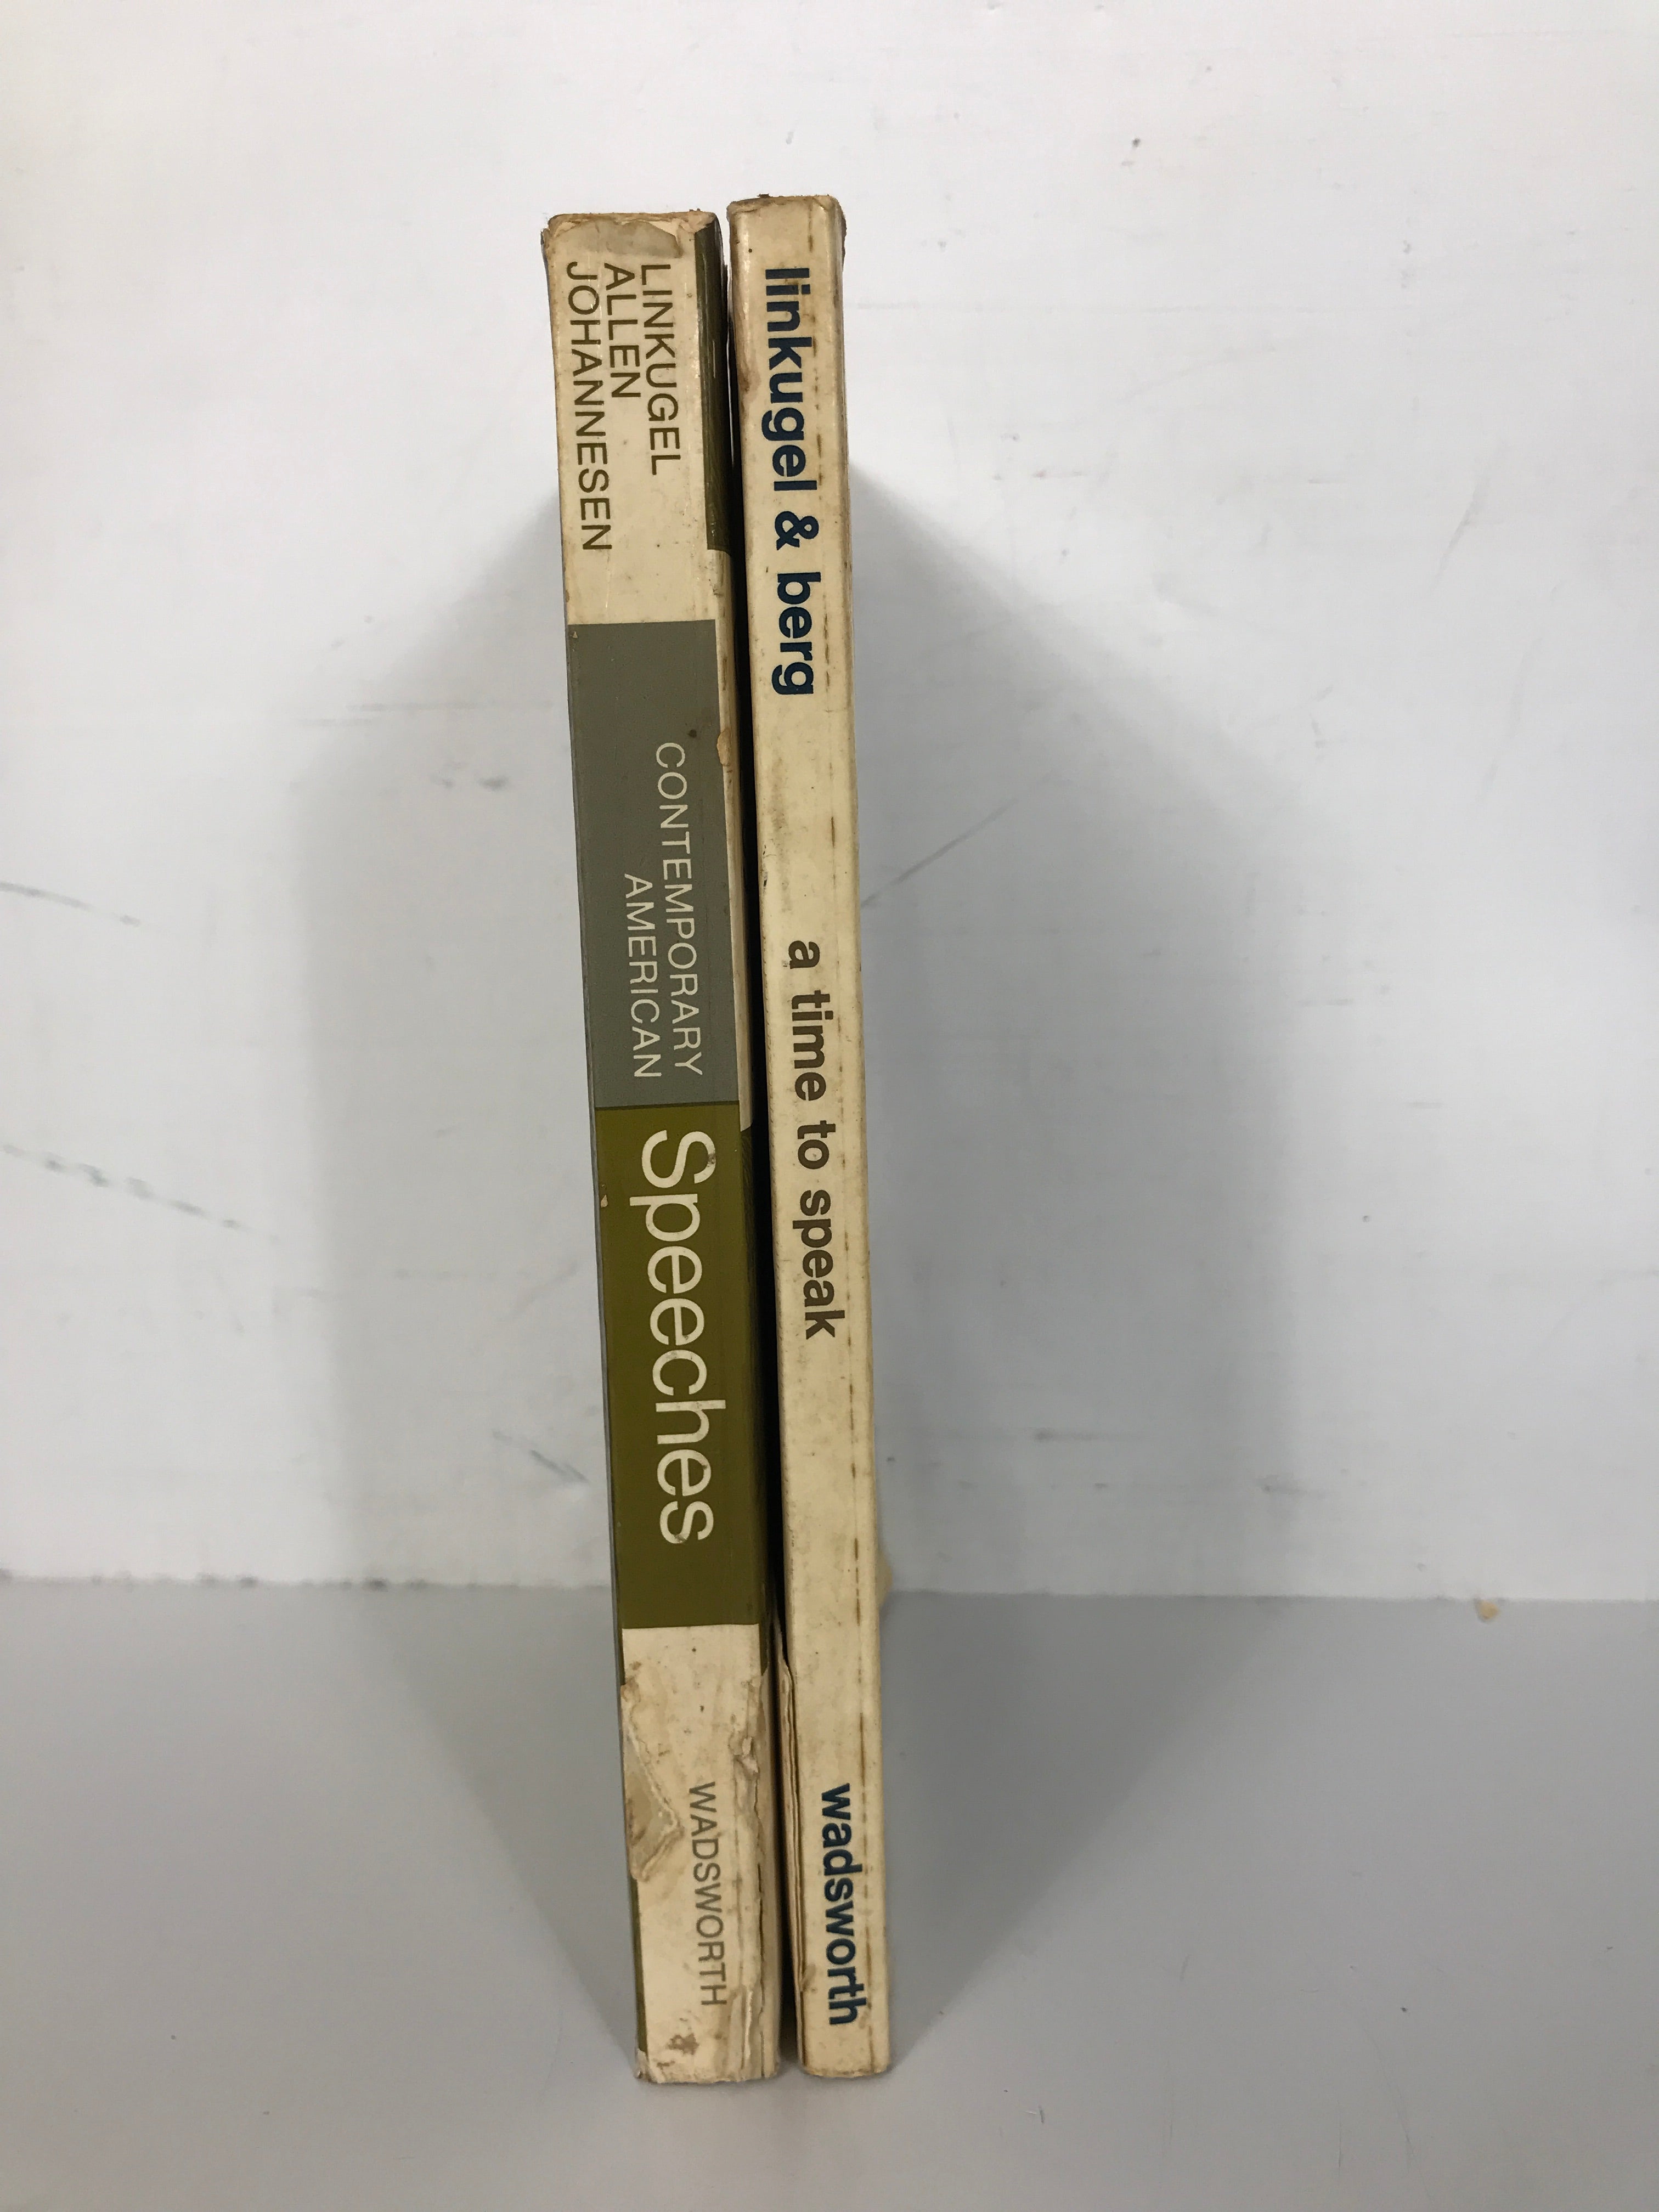 Lot of 2 Vintage Public Speaking Books by Linkugel:1970, 1st & 1969, 2nd SC